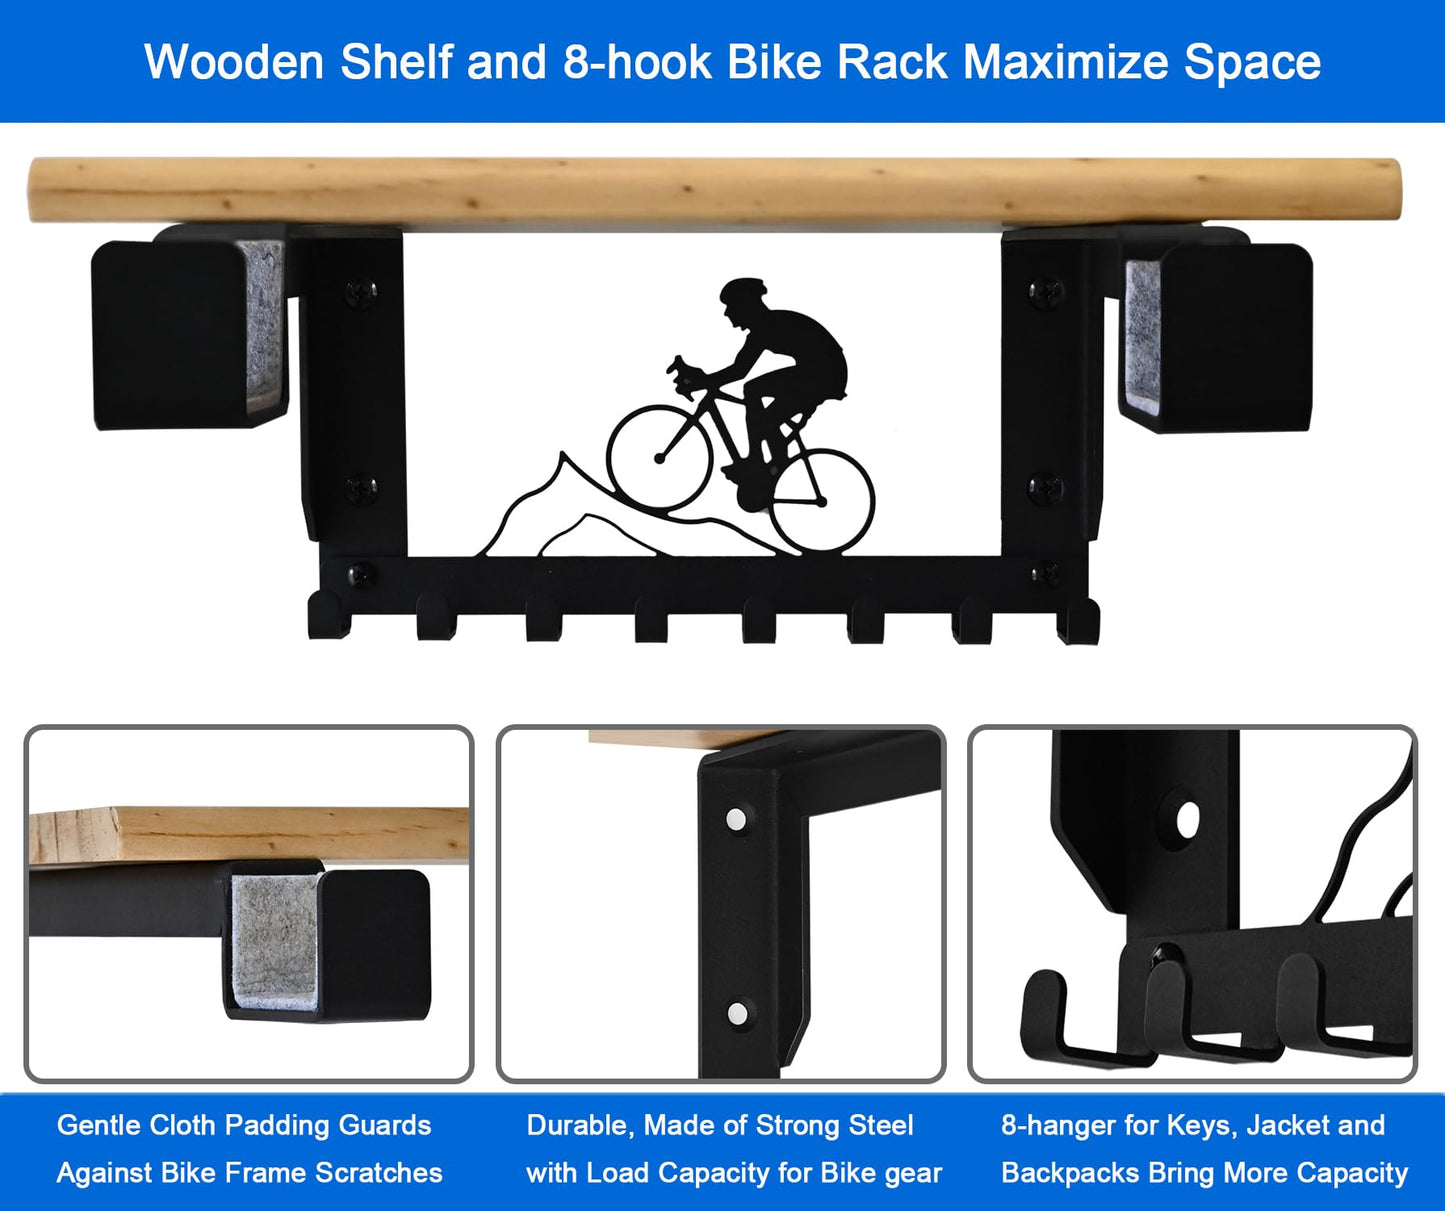 Bike Rack Wall Mount with Shelf and 8 Hooks Offer Horizontal Indoor Bike Storage for Sheds Garages. Wooden Bike Rack Bracket for Road, Mountain,